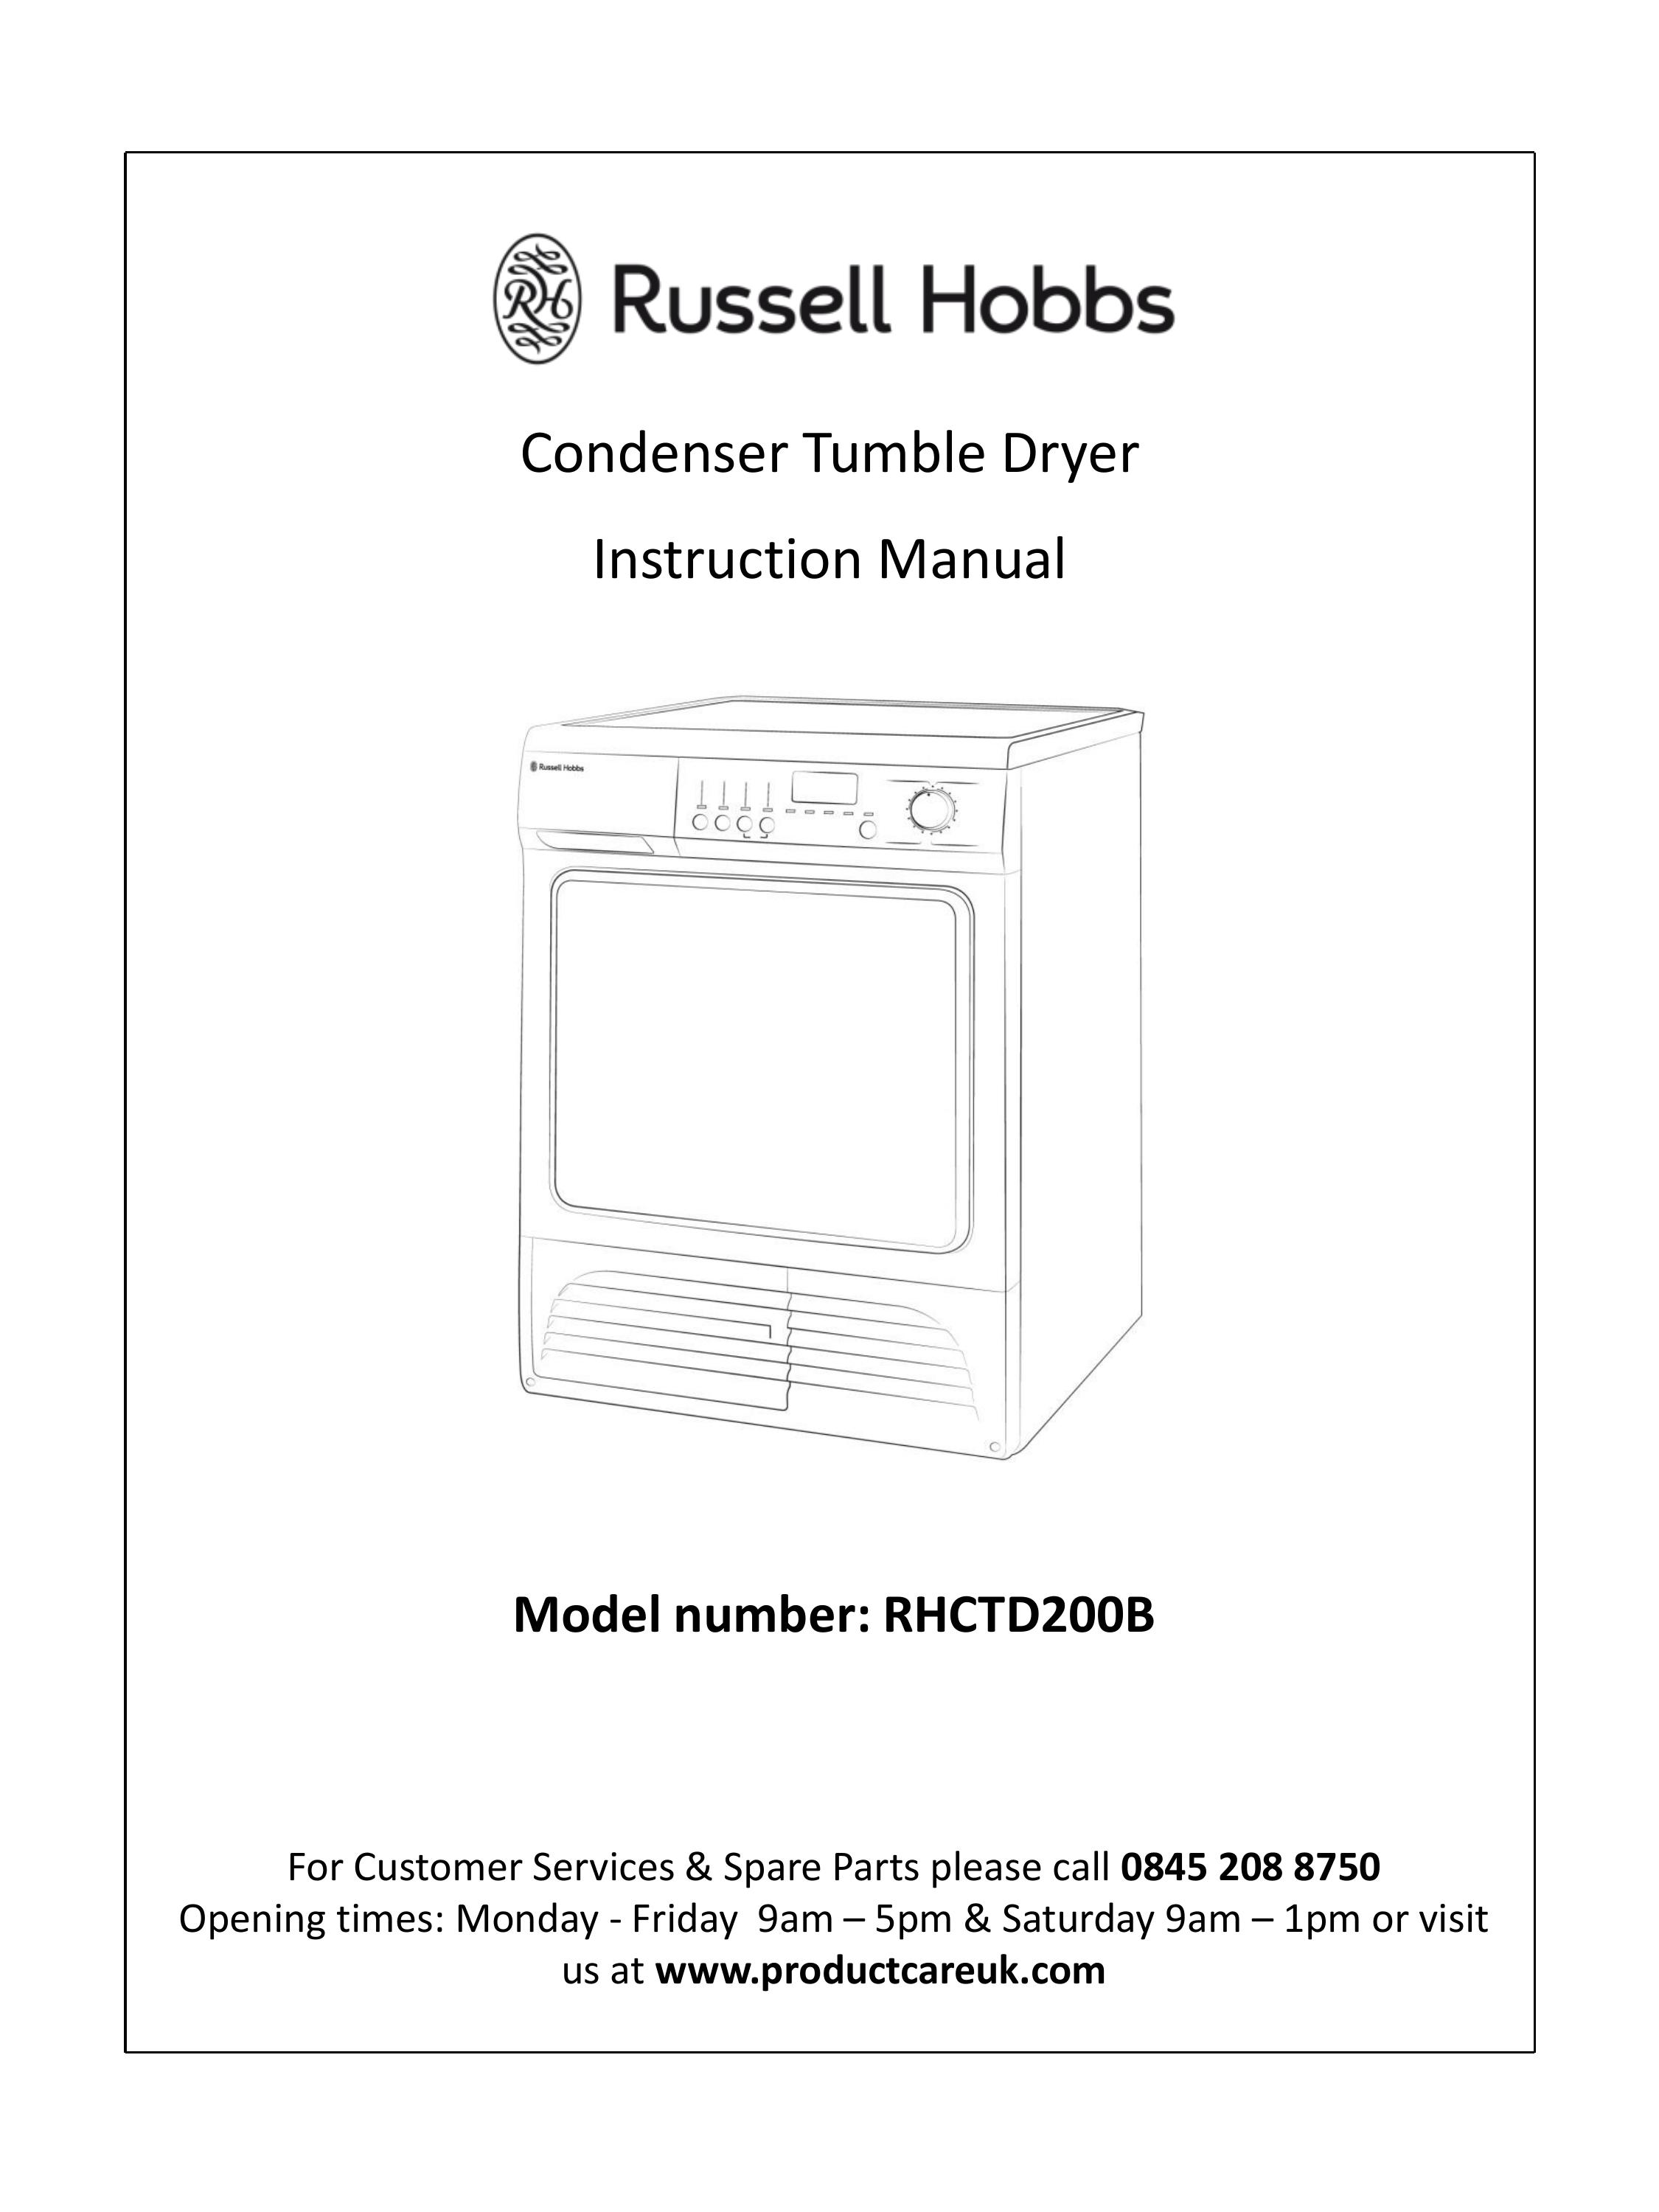 Russell Hobbs RHCTD200B Clothes Dryer User Manual